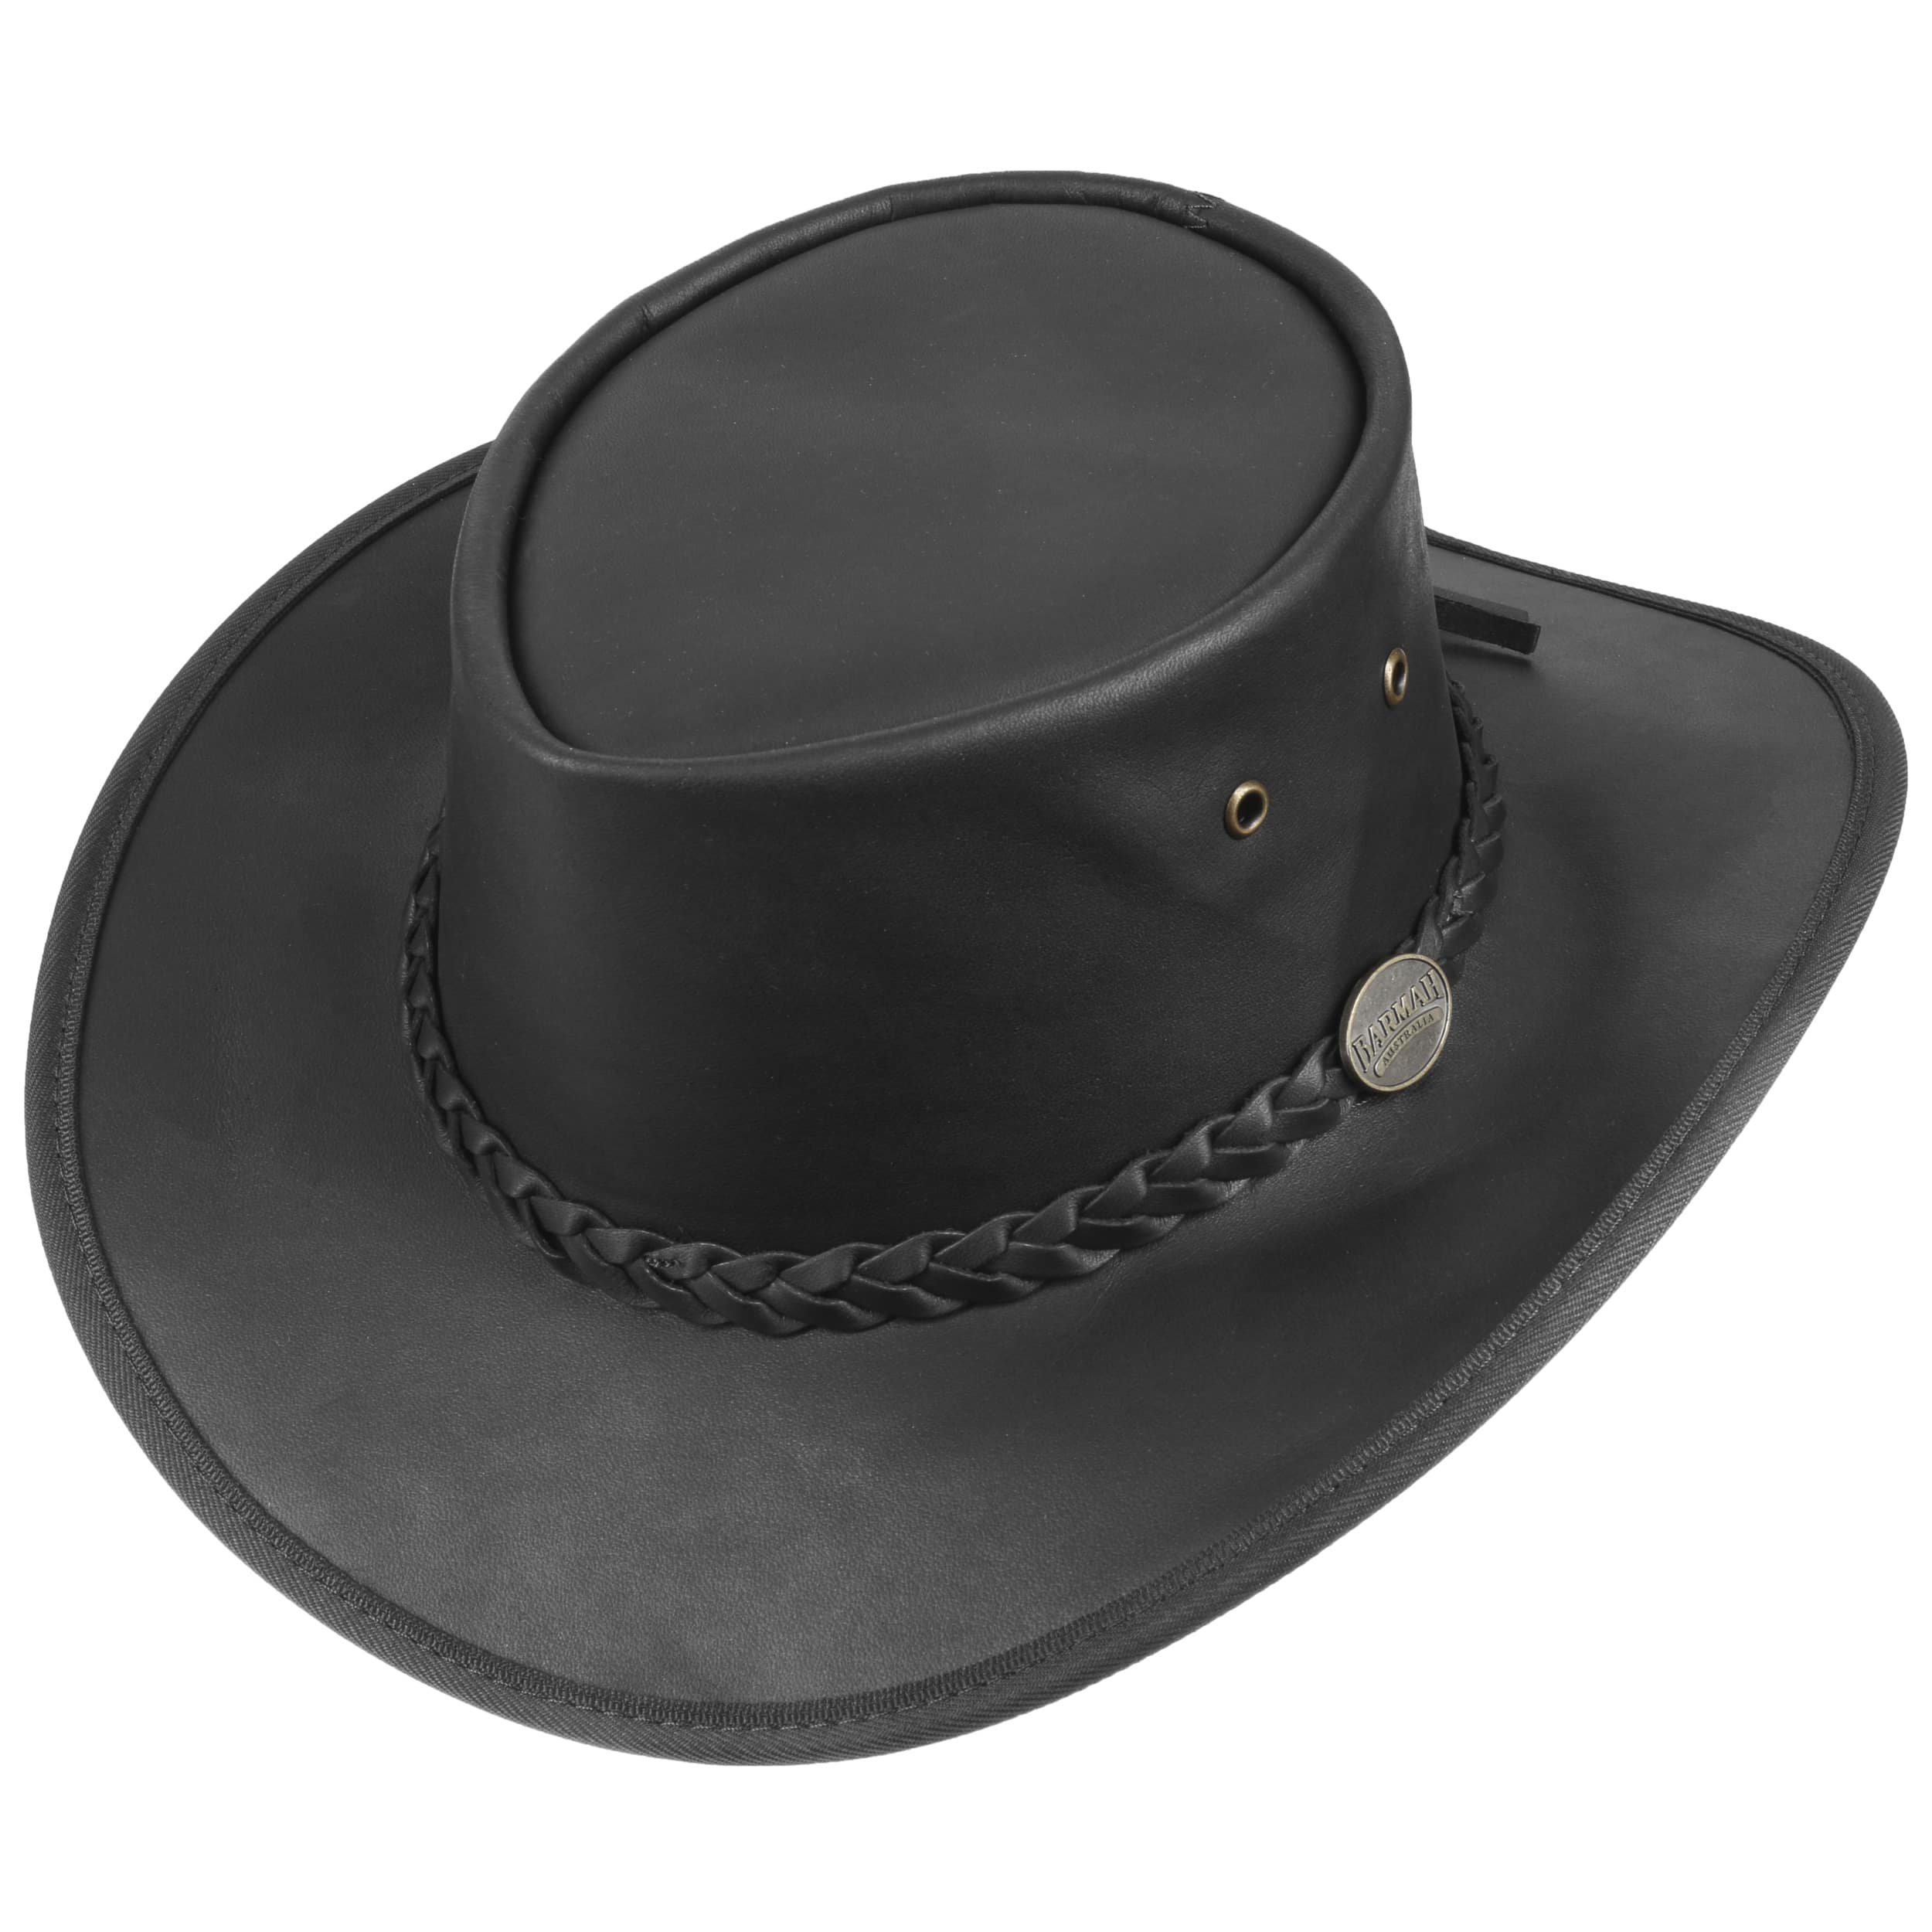 orig BARMAH schwarzer Leder Hut AUSTRALIEN Outback schwarz knautschbar